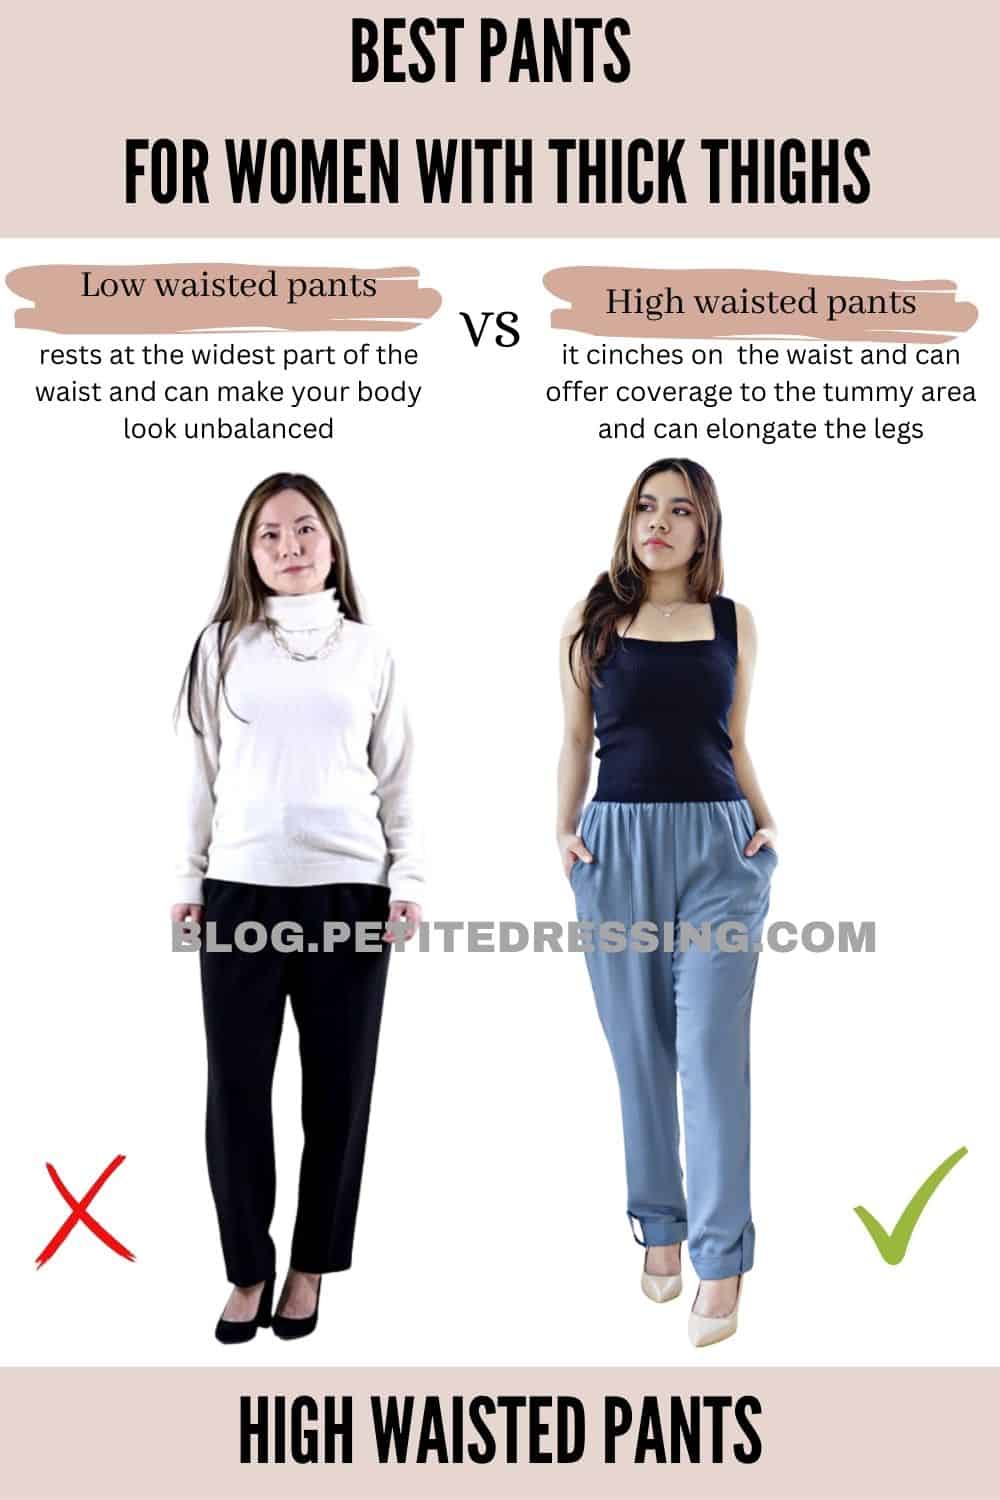 High waisted pants 1